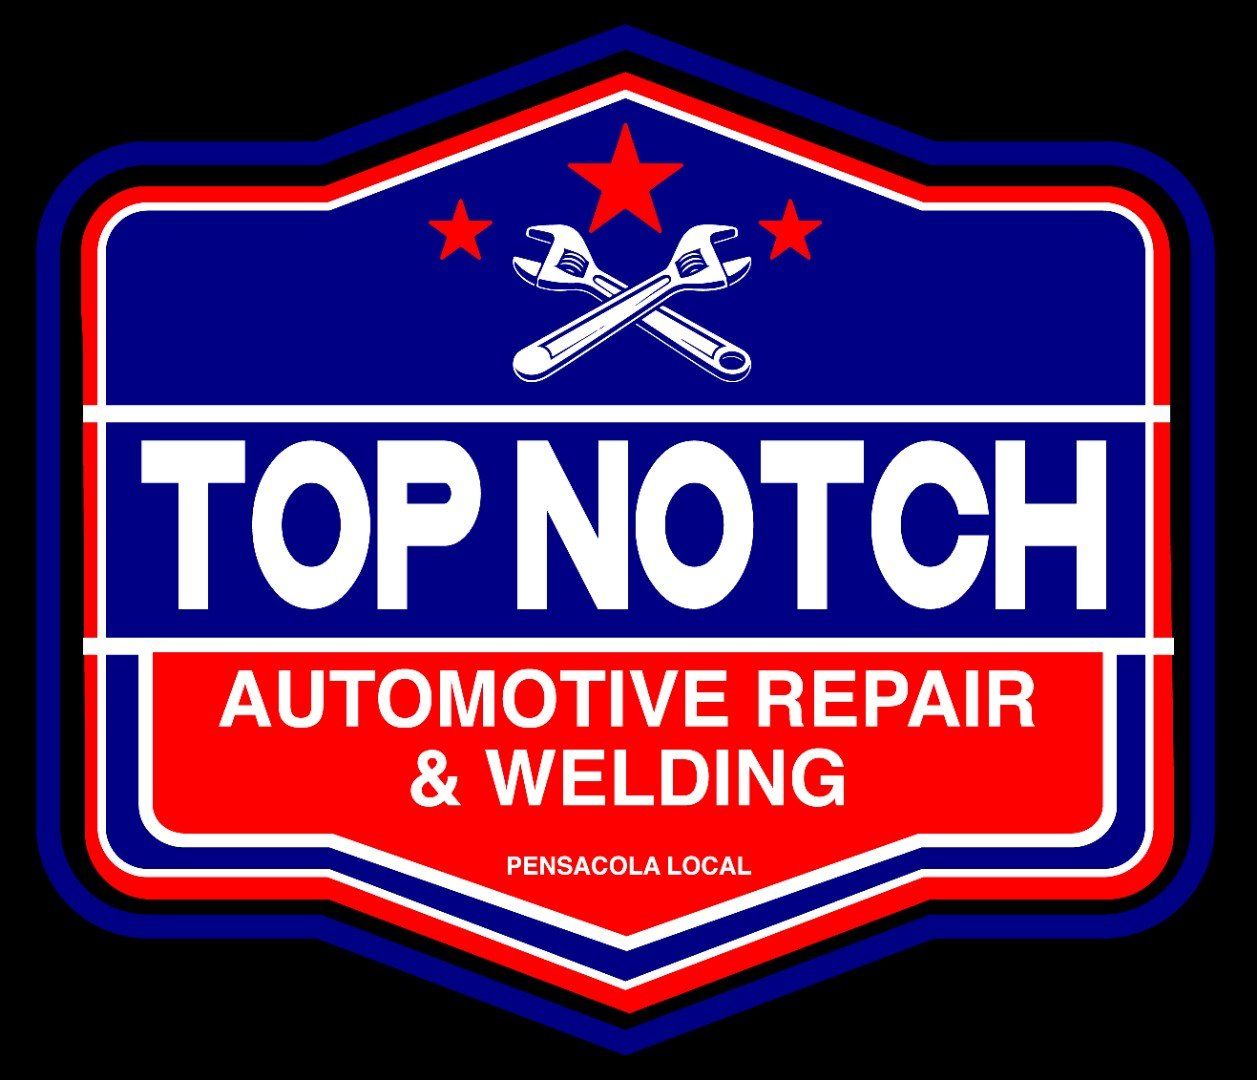 Top Notch Automotive Repair & Welding